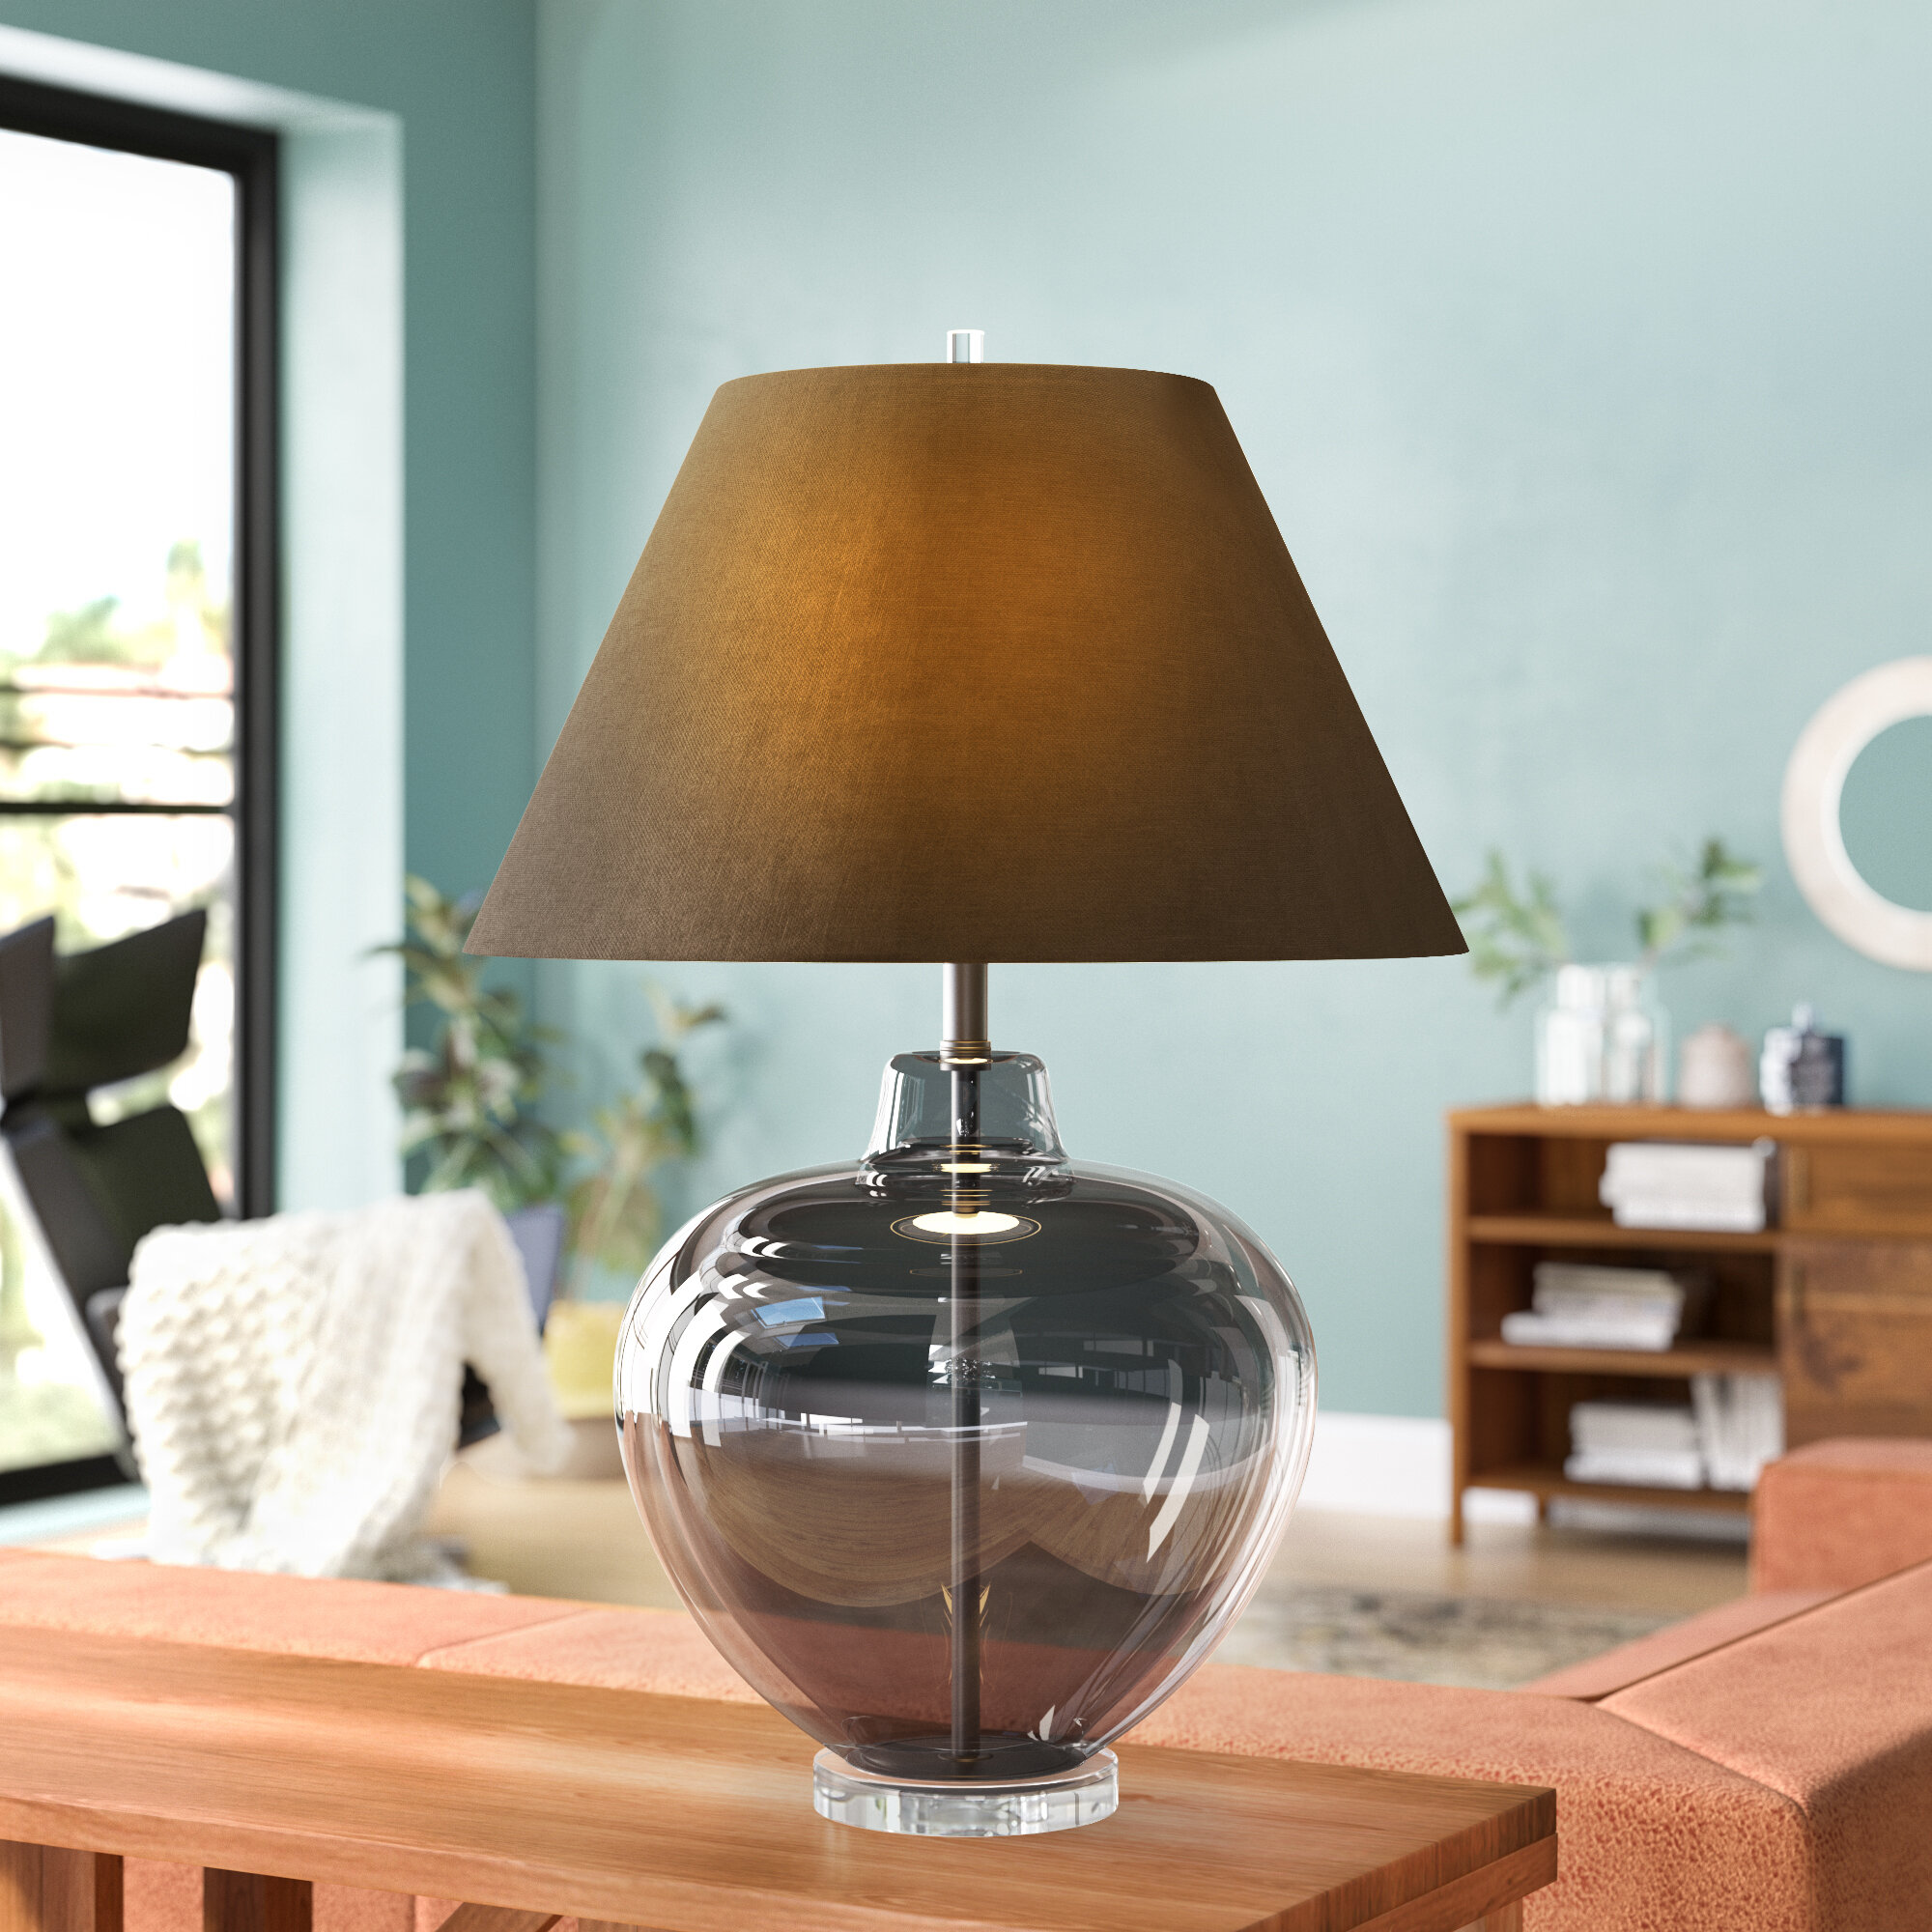 Brayden Studio Sammie Large Round Glass Table Lamp Reviews